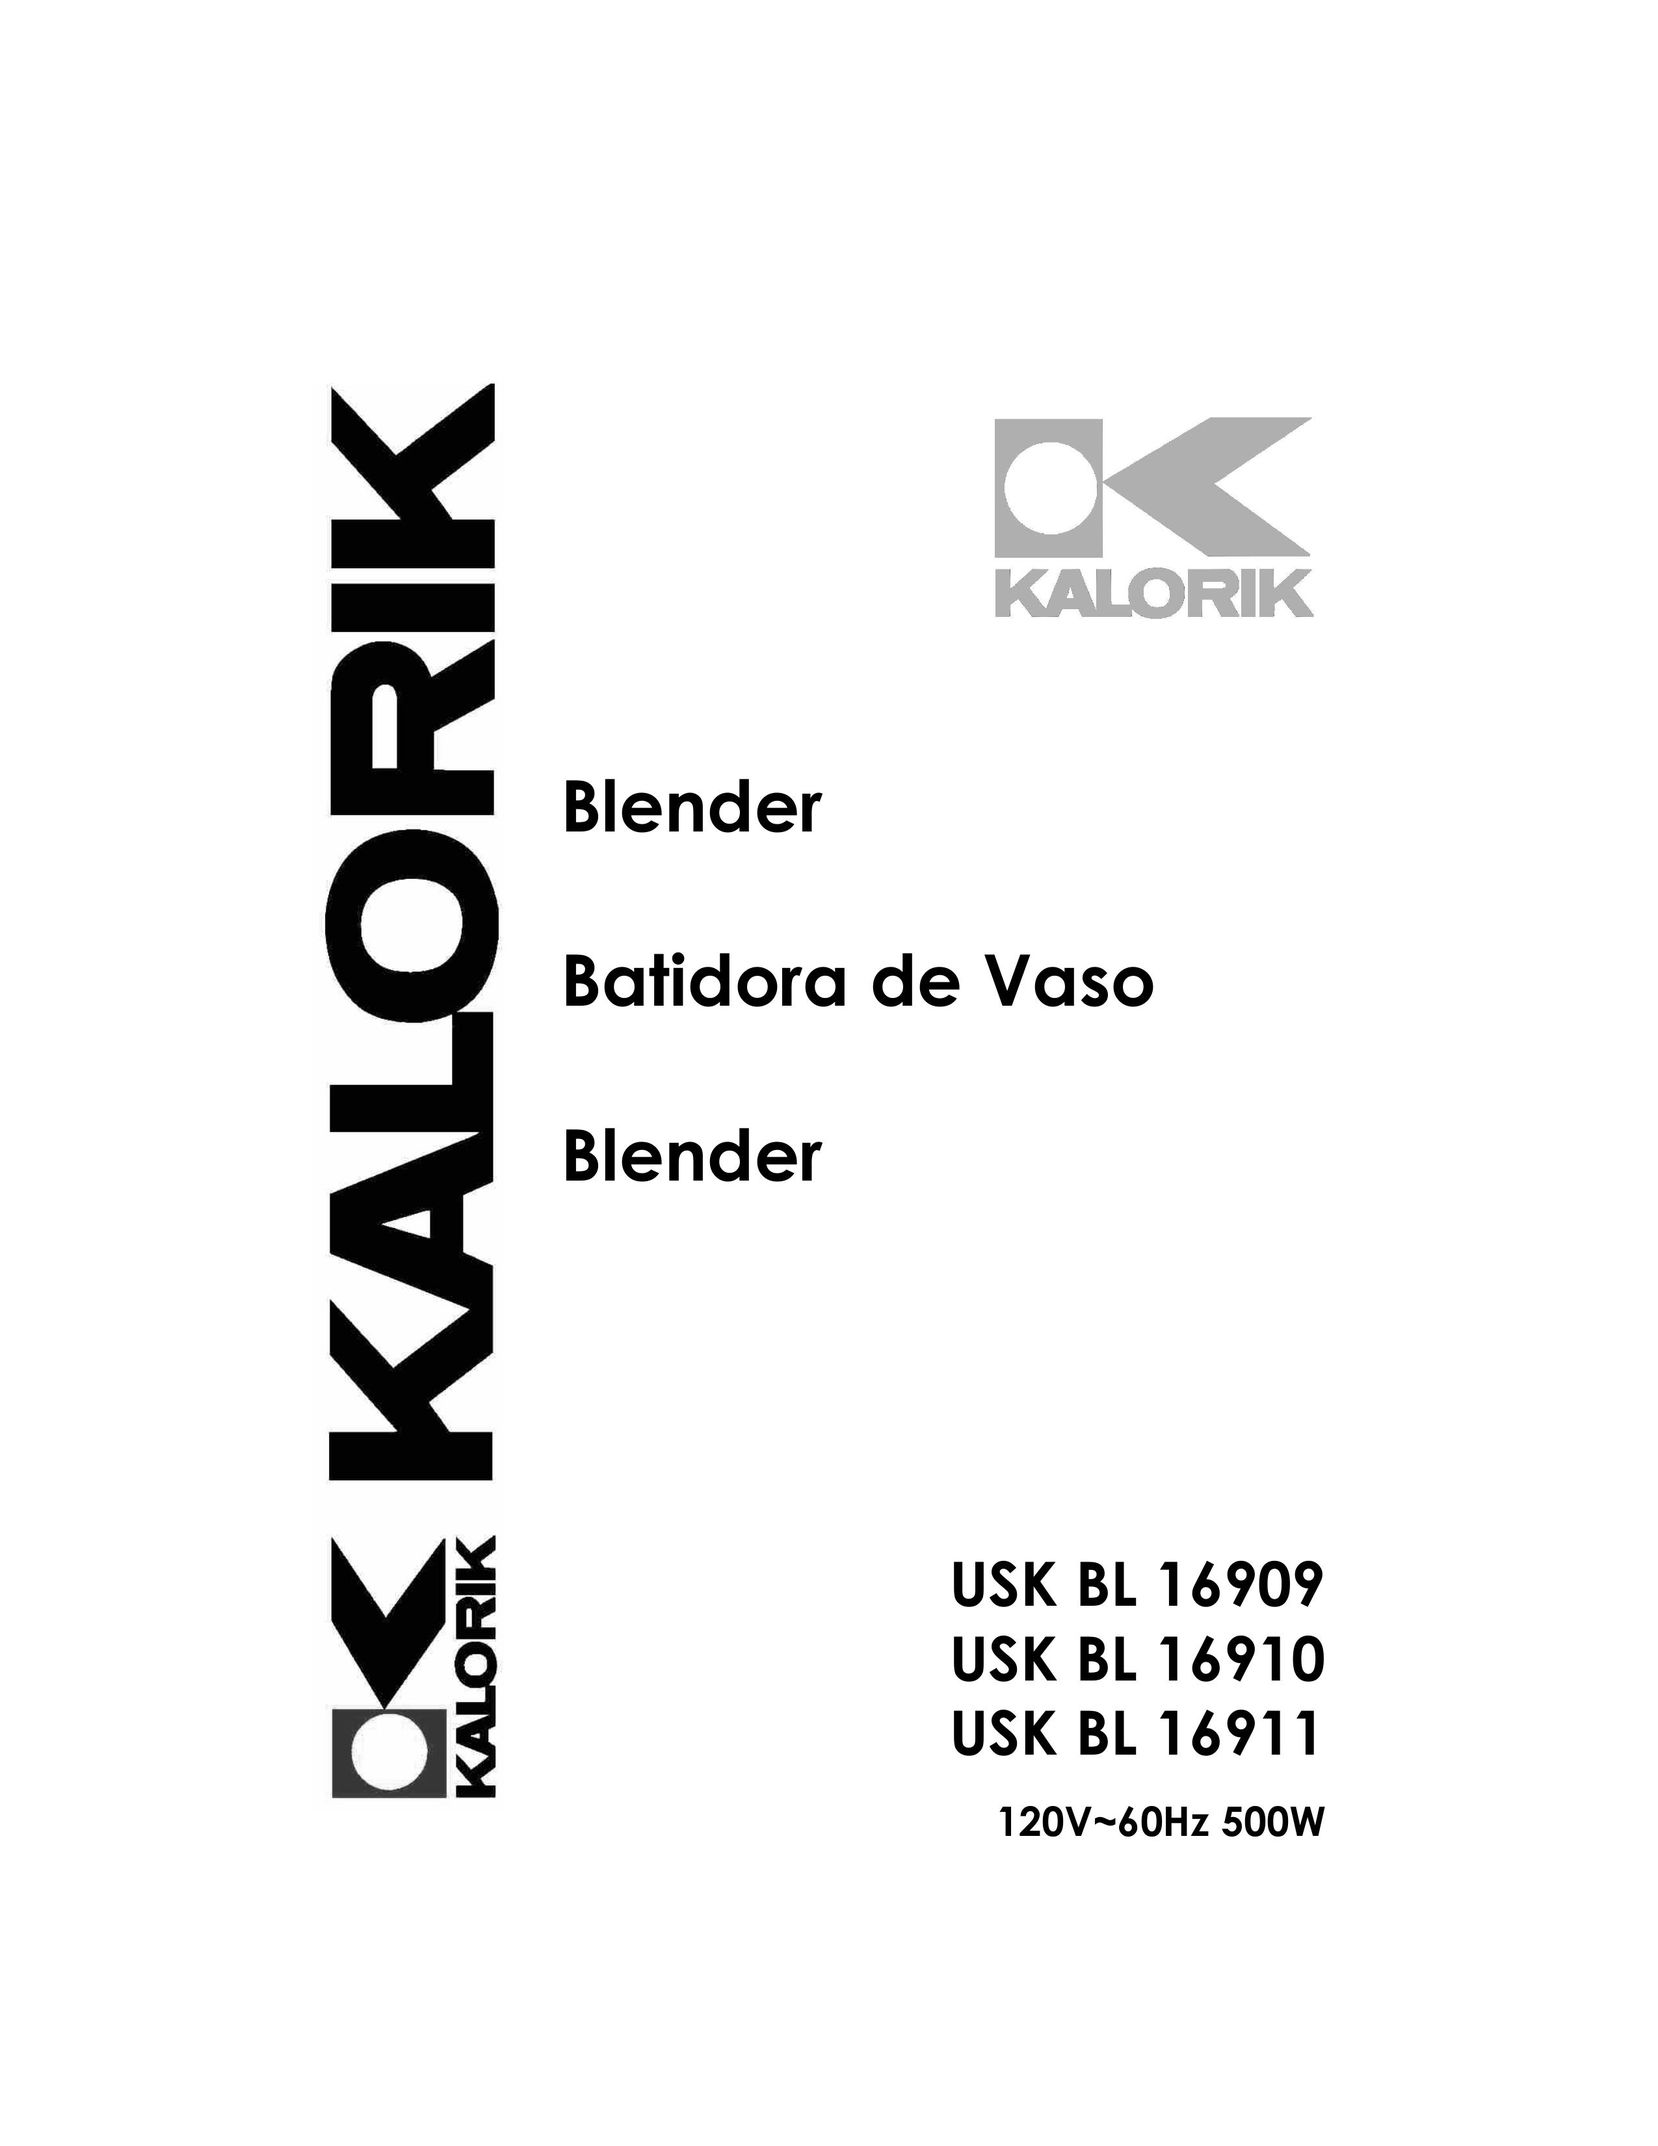 Kalorik USK BL 16910 Blender User Manual